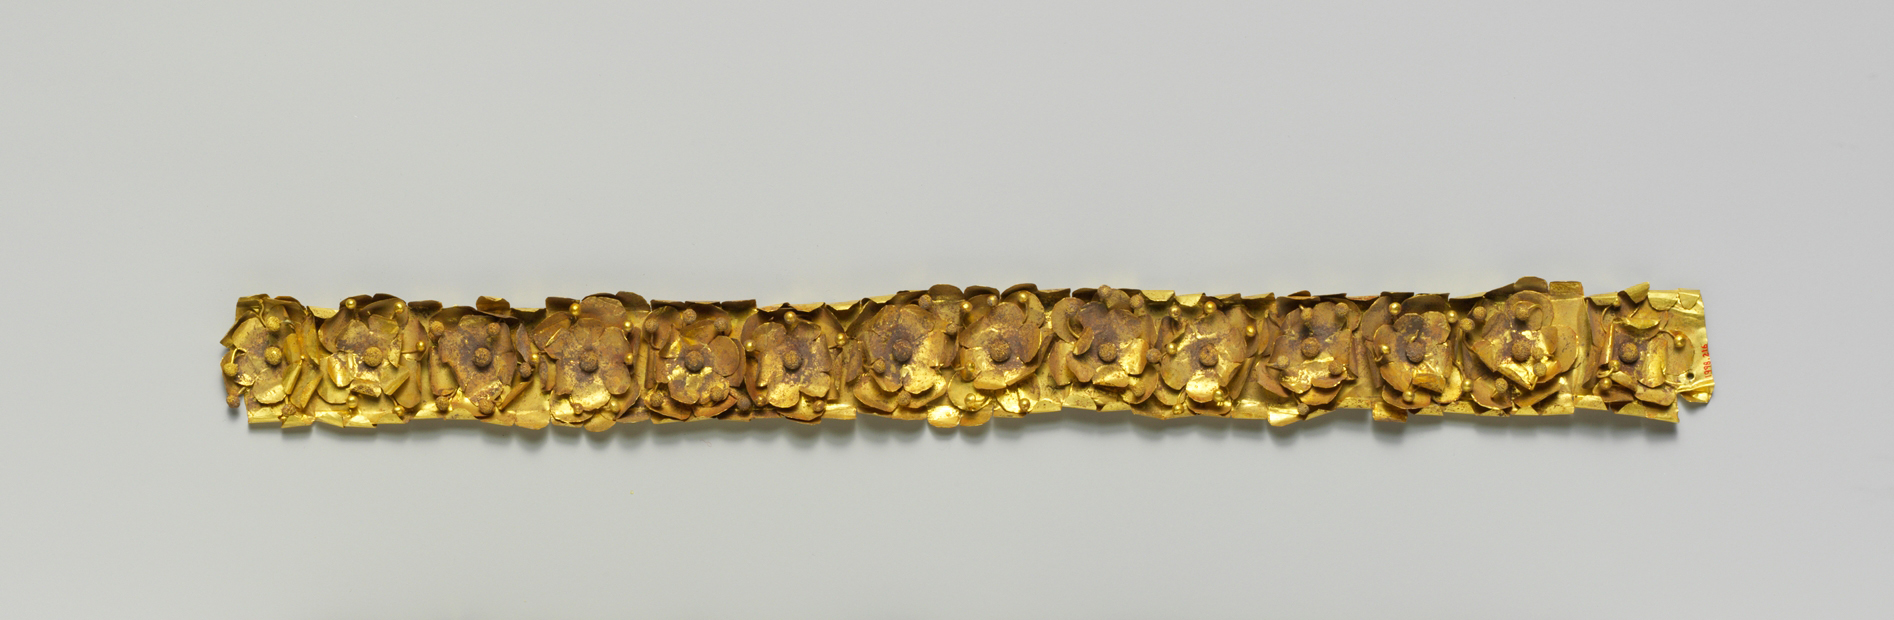 Gold diadem, Greek, South Italian or Etruscan, Hellenistic